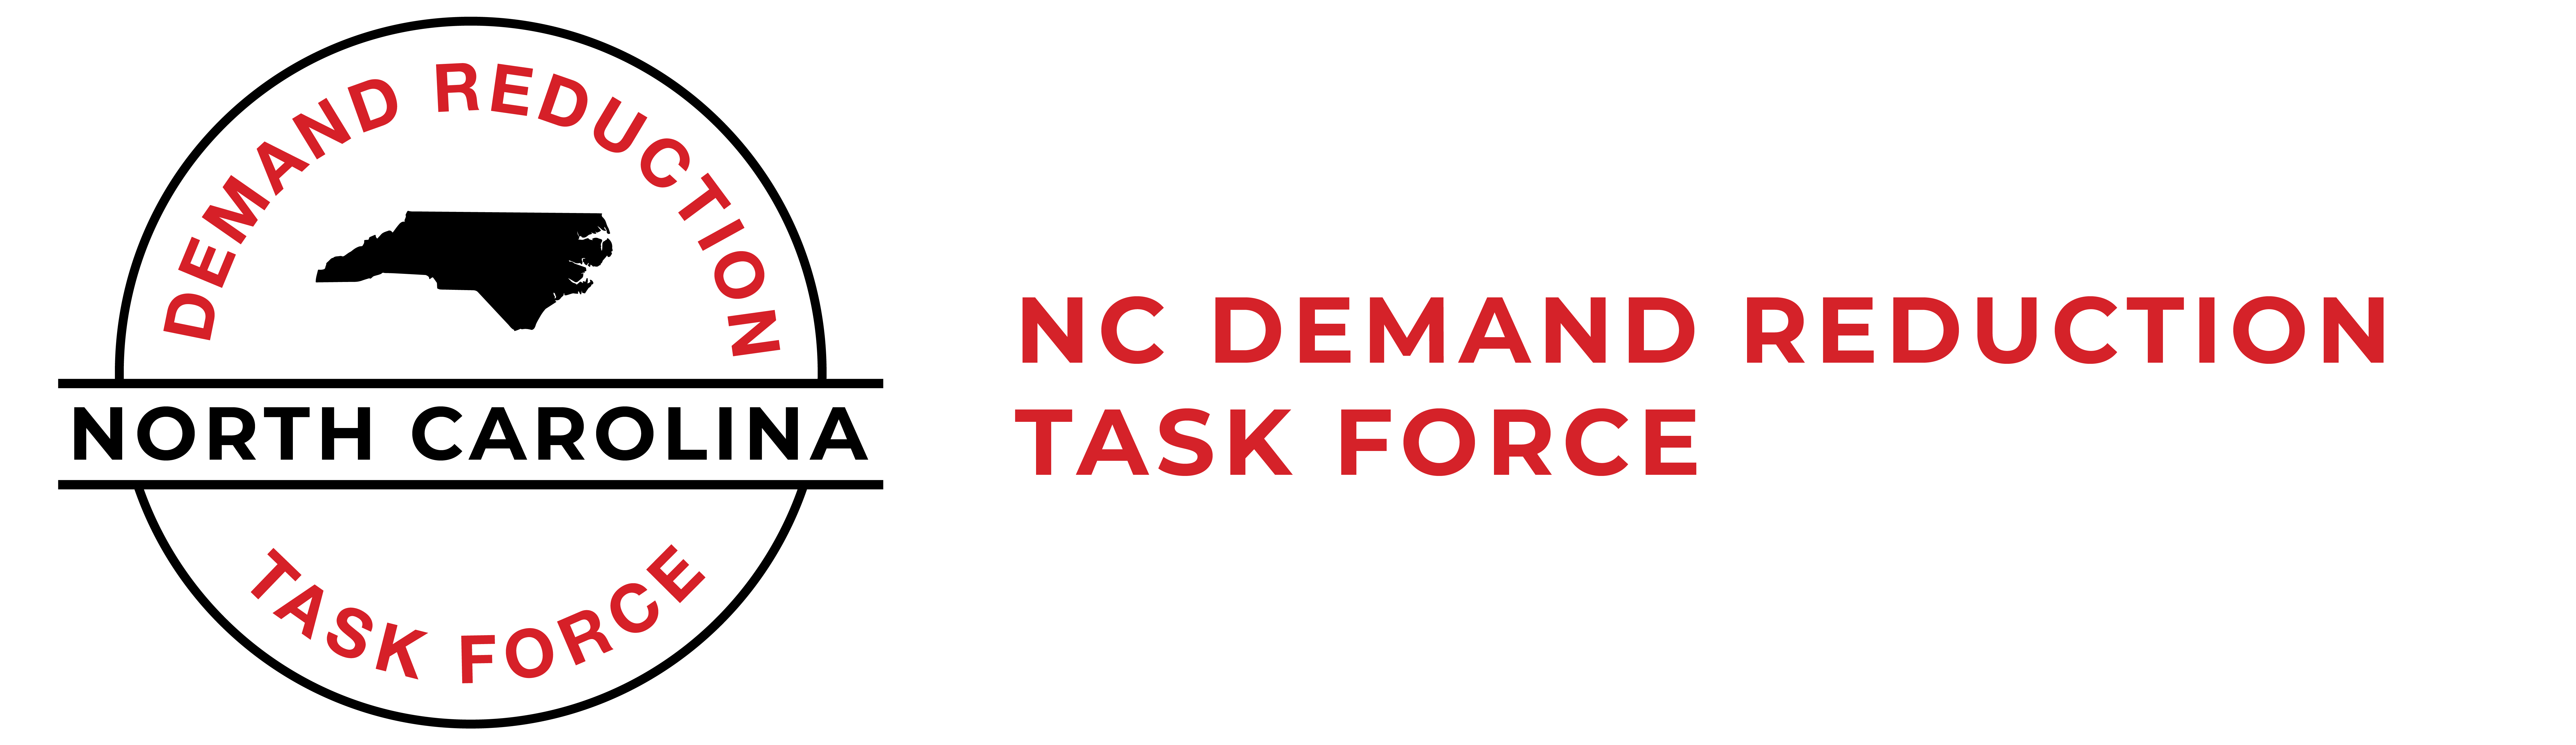 NC Demand Reduction Task Force